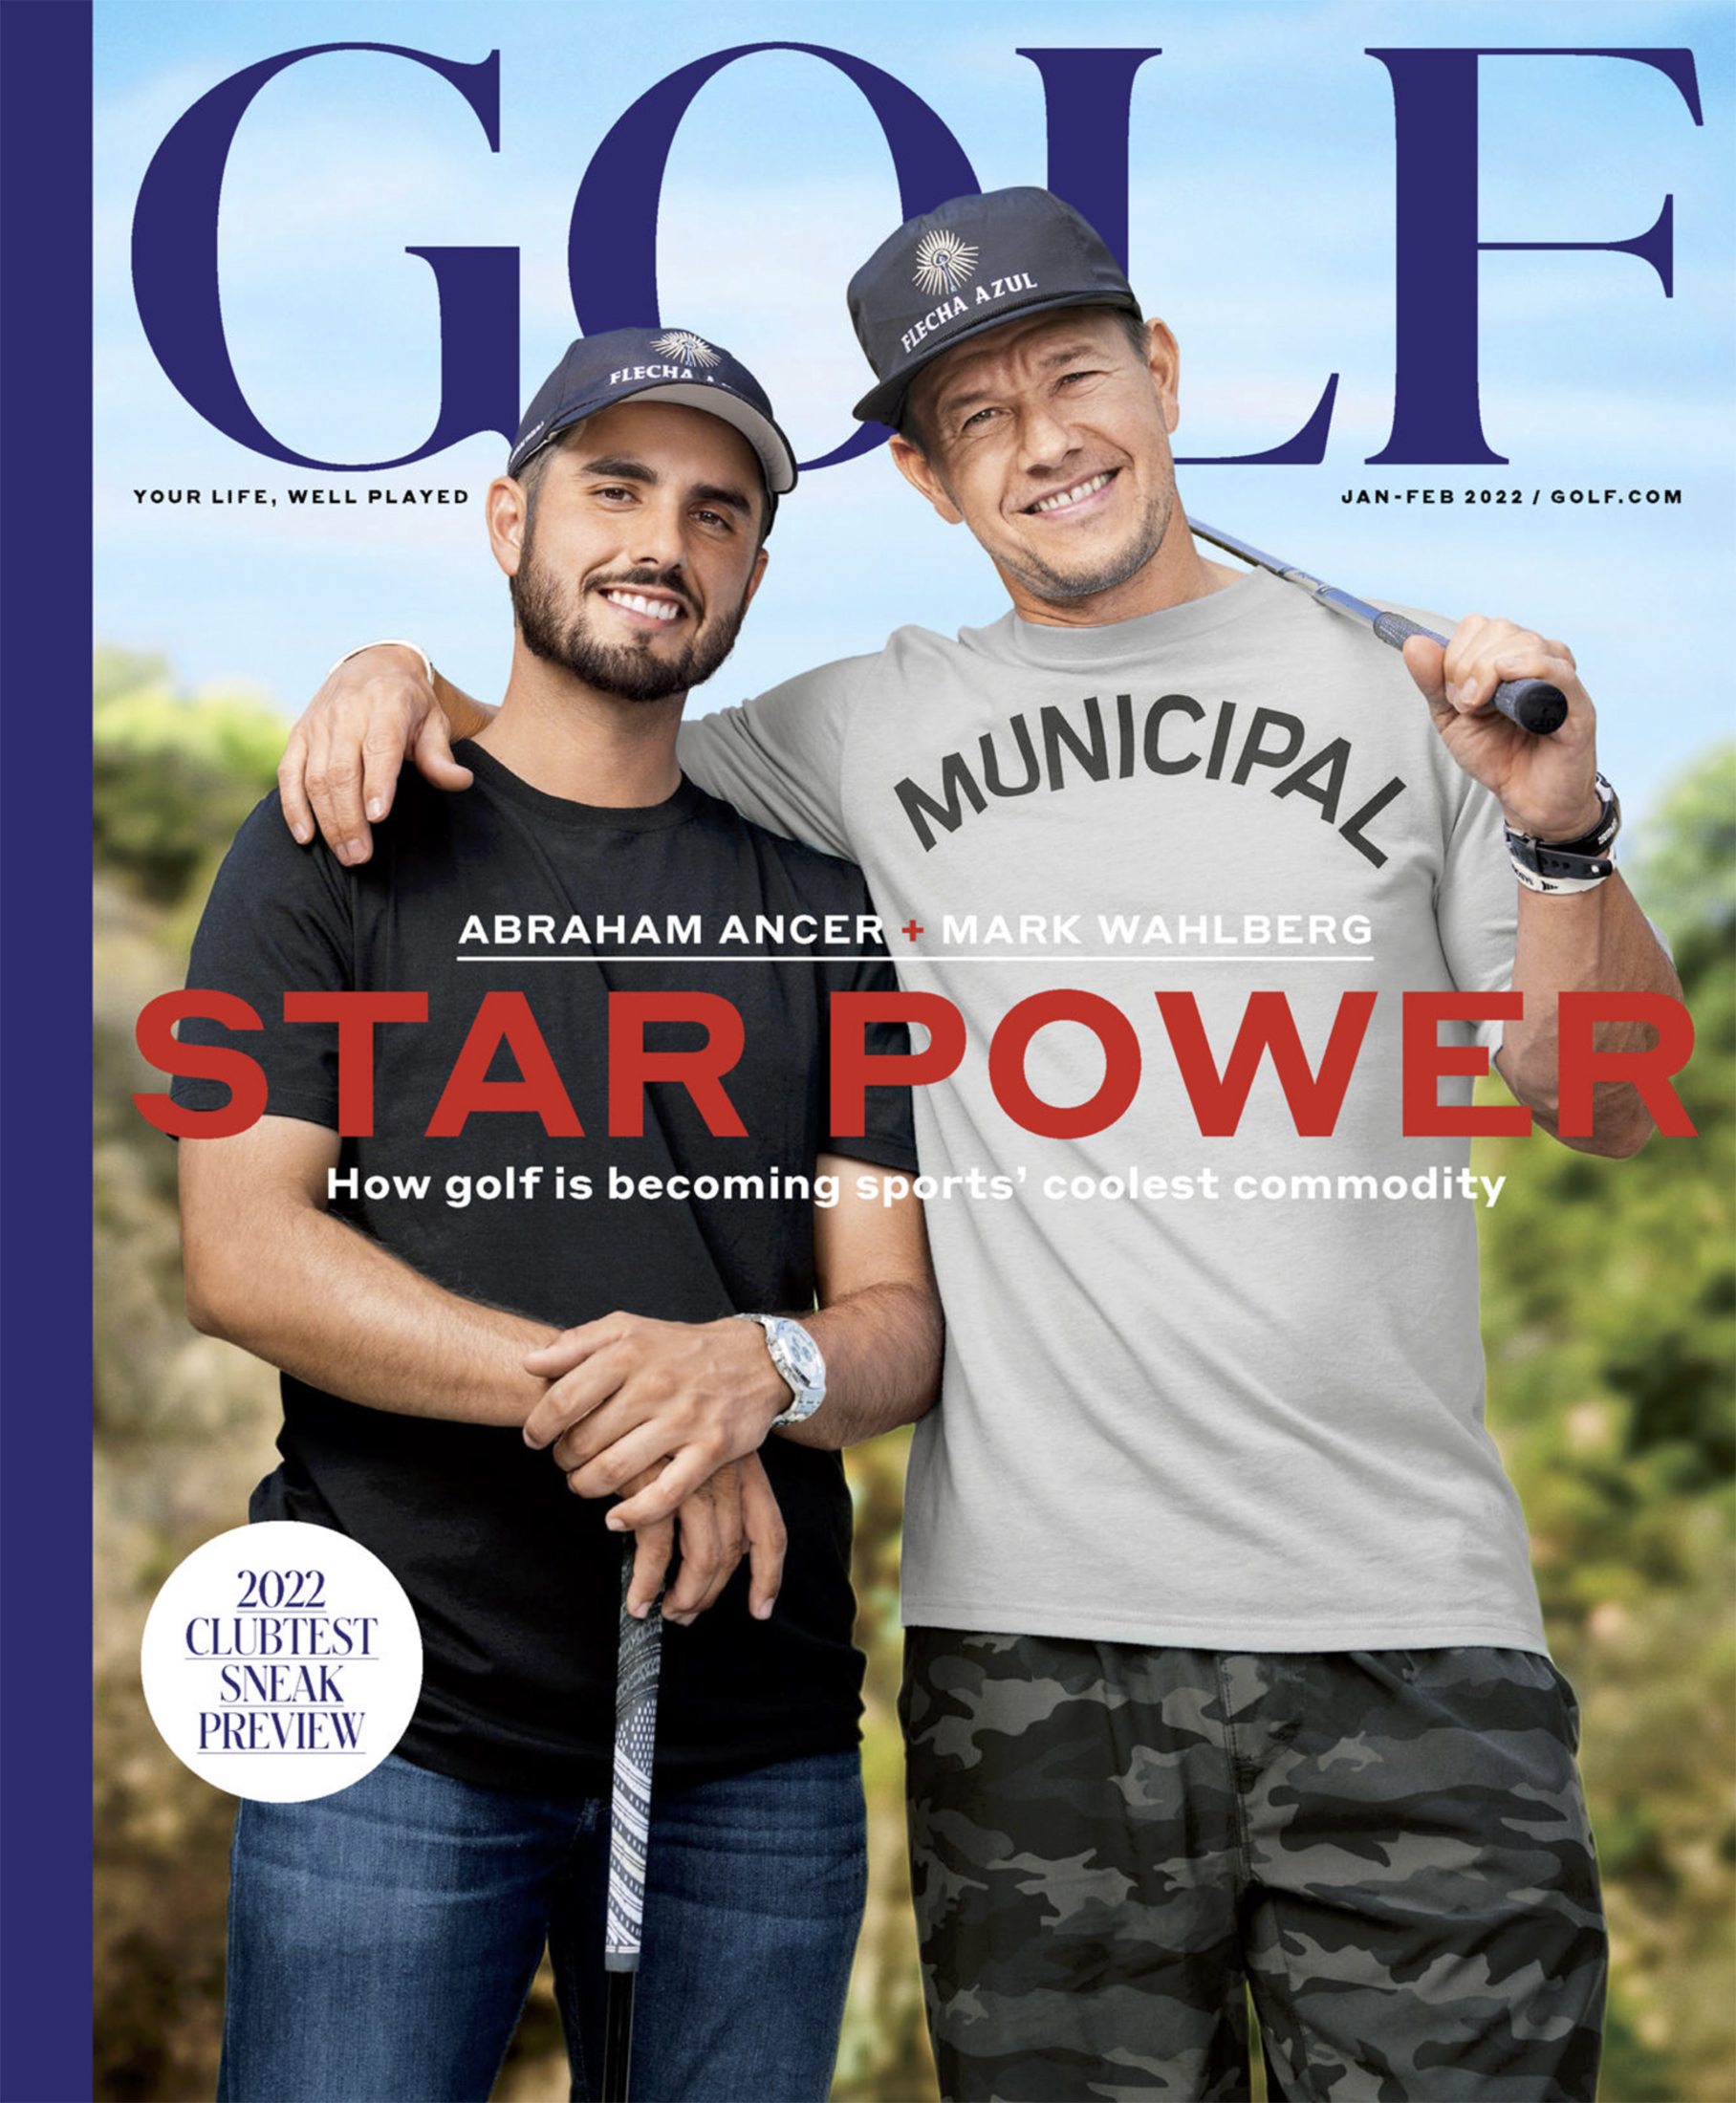 Mark Wahlberg and Abraham Ancer for Golf Magazine - Stephen Denton Photography, Los Angeles, California based interior & hospitality photographer